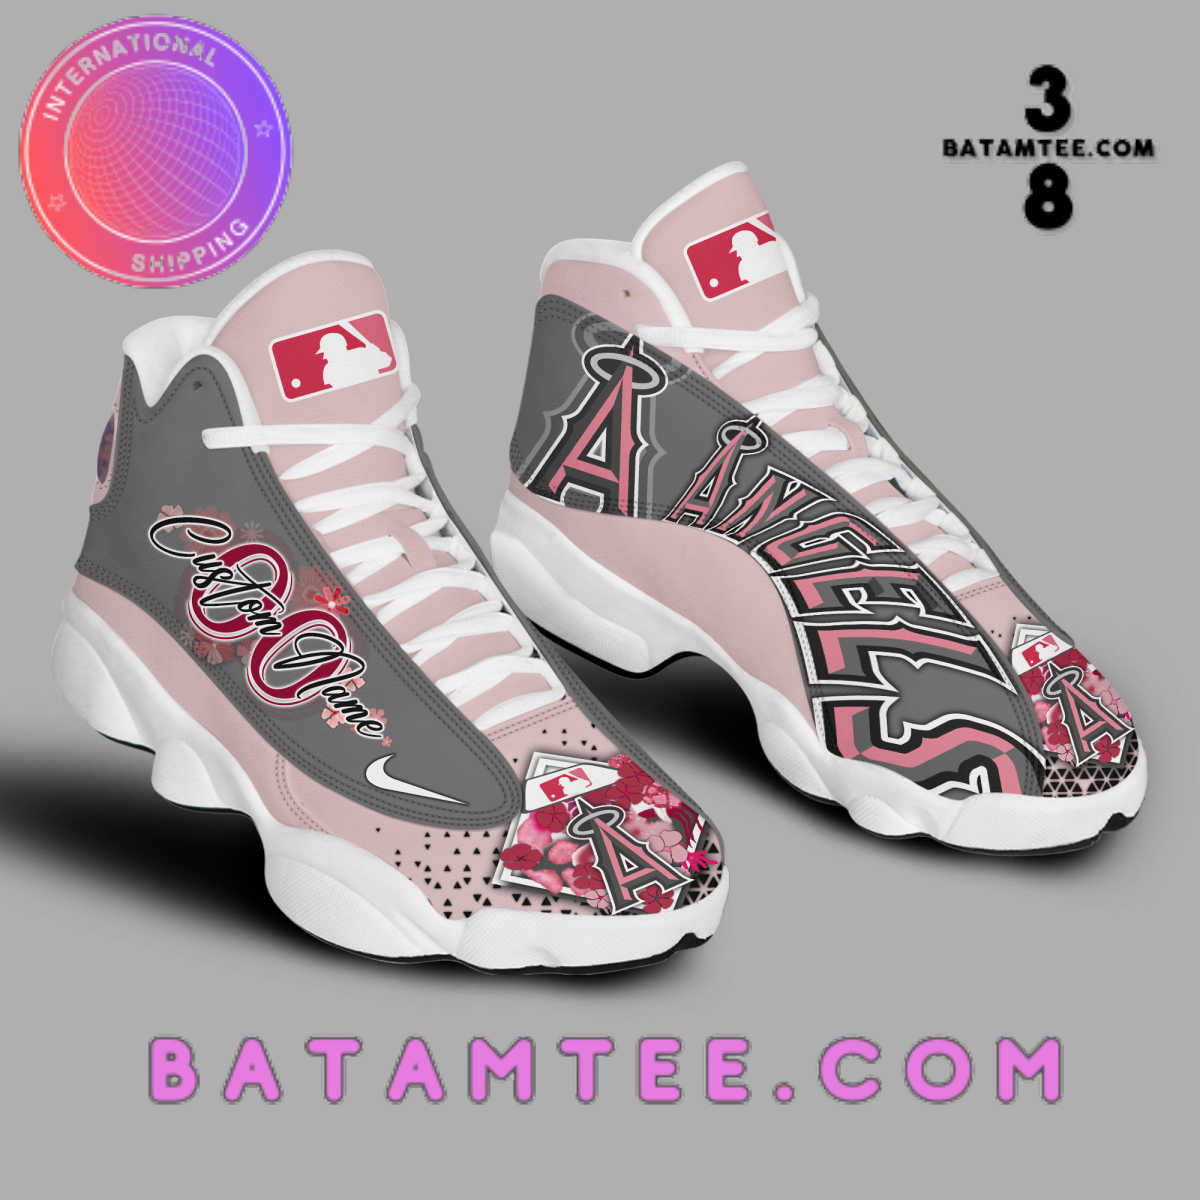 Los Angeles Angels Shohei Ohtani 17 Air Jordan 13 Shoes - Tagotee